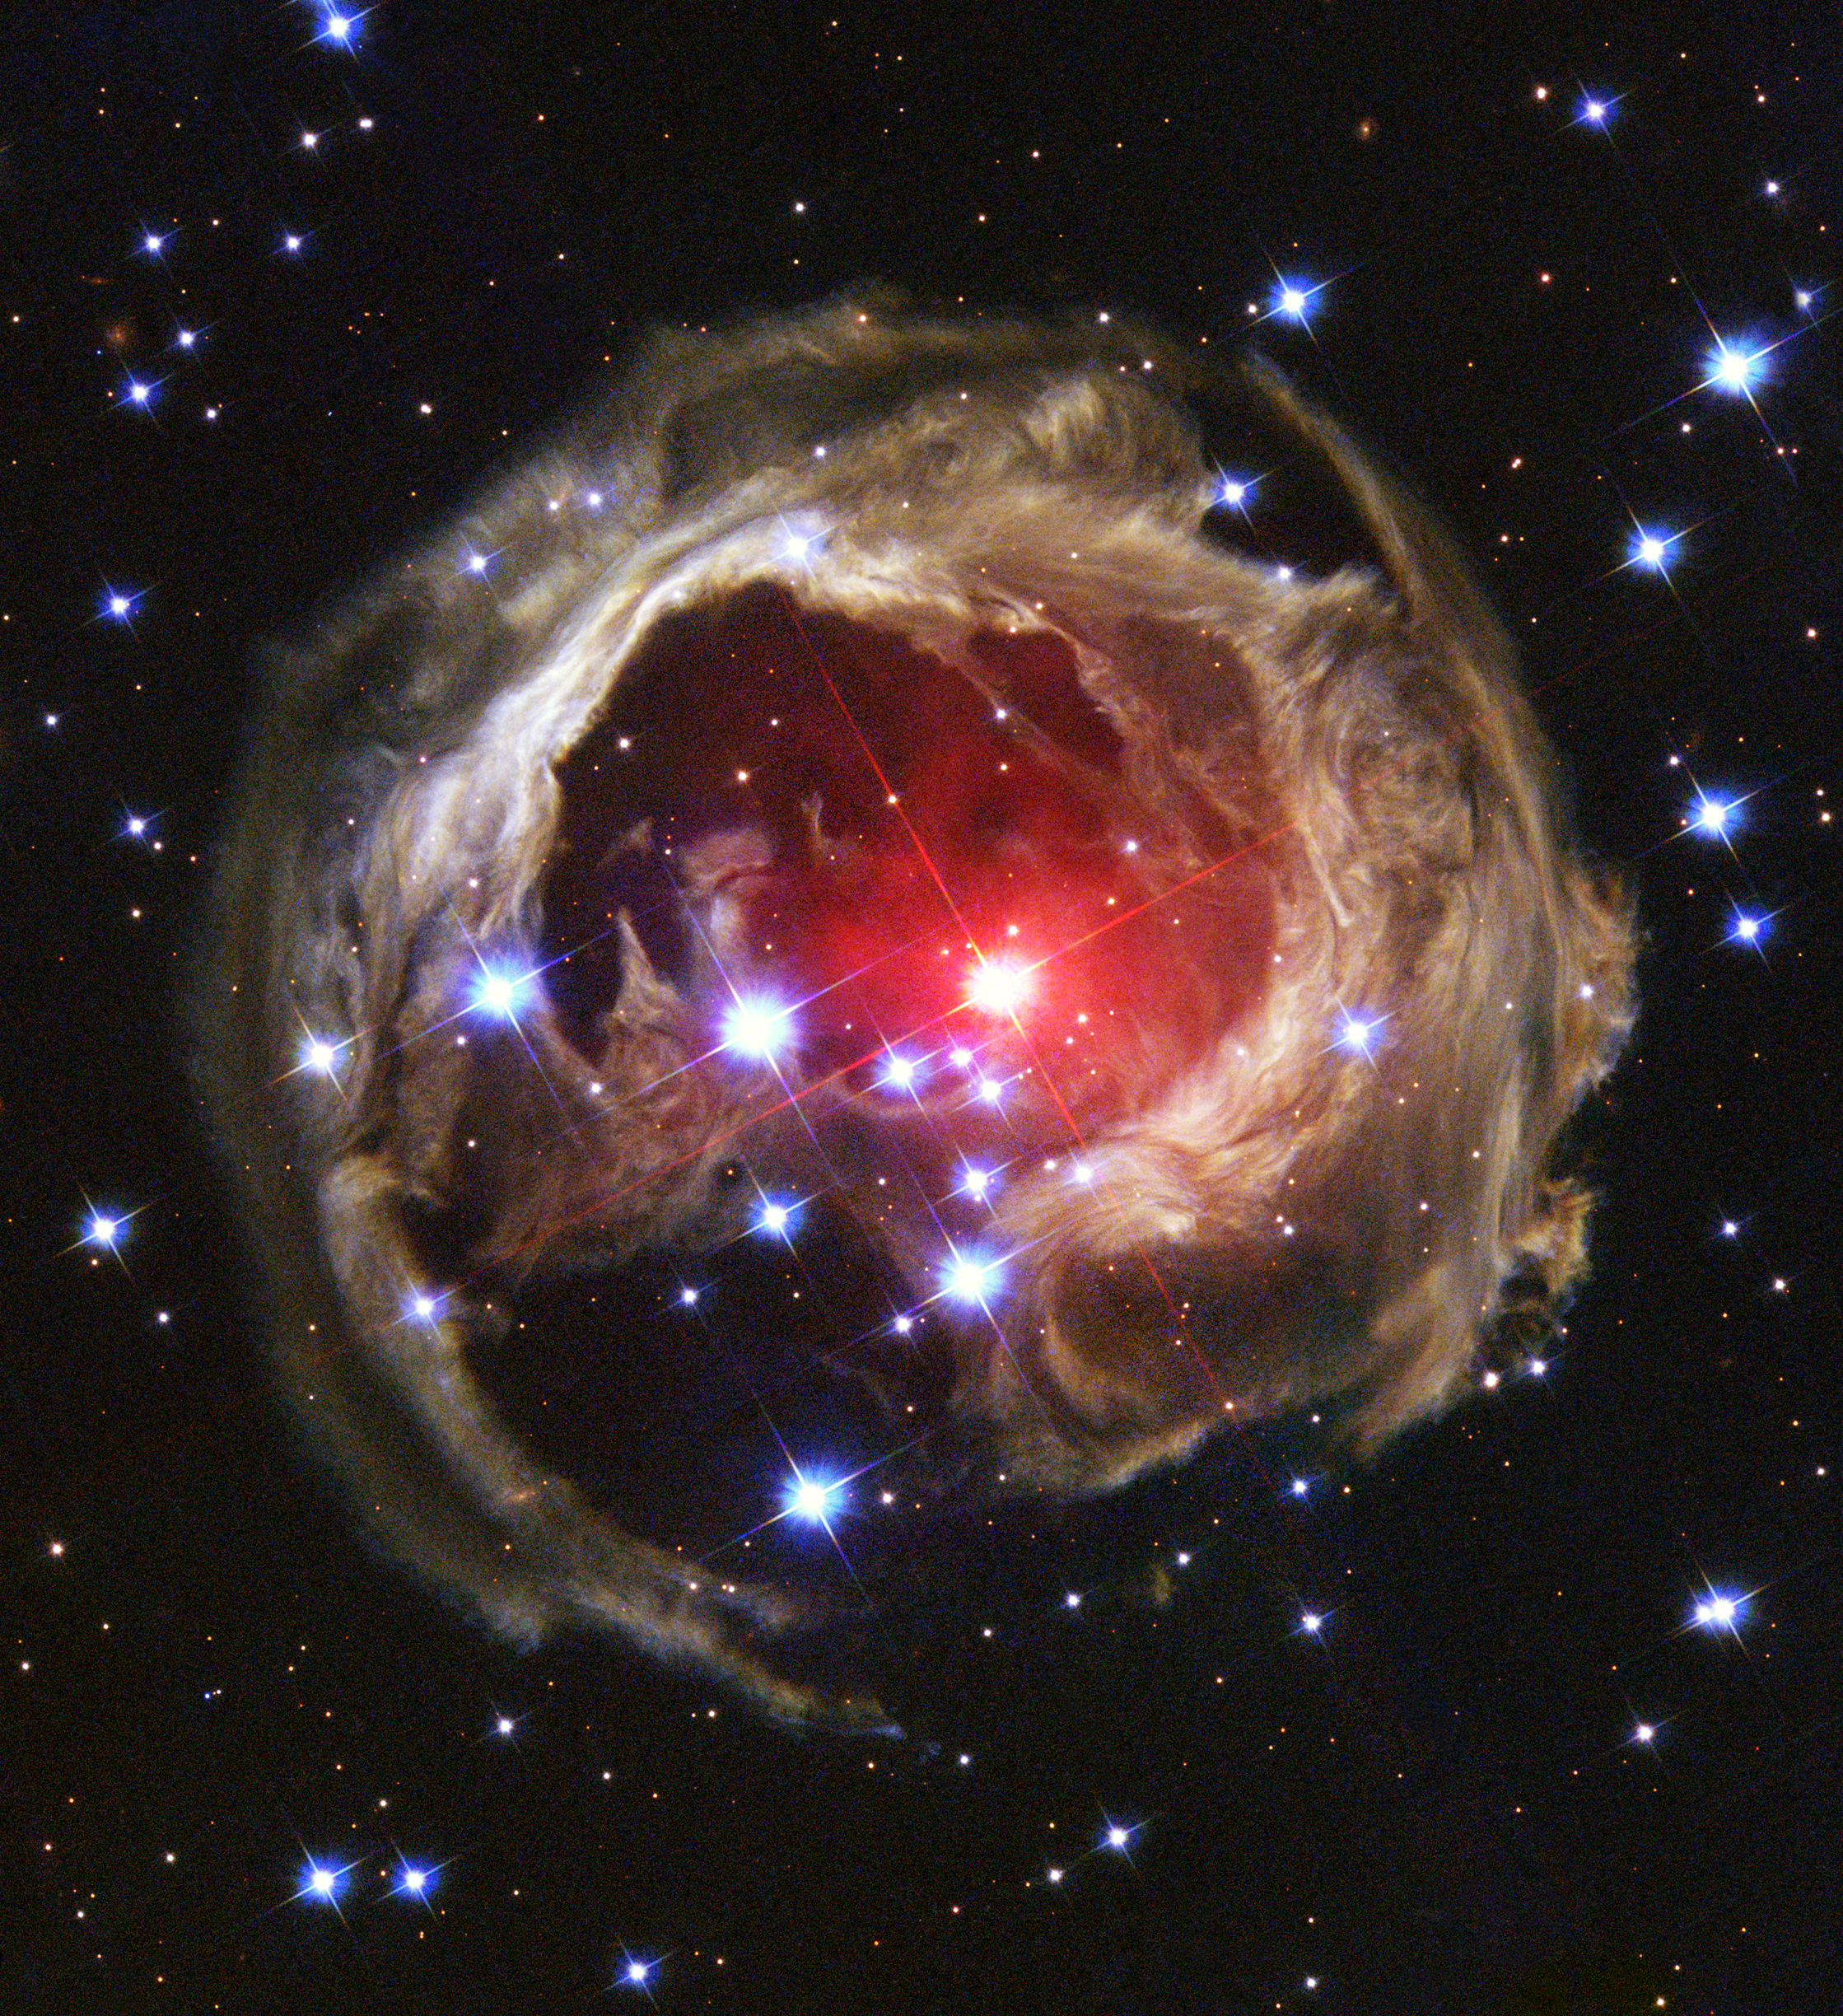 Light Echoes from V838 Mon | NASA